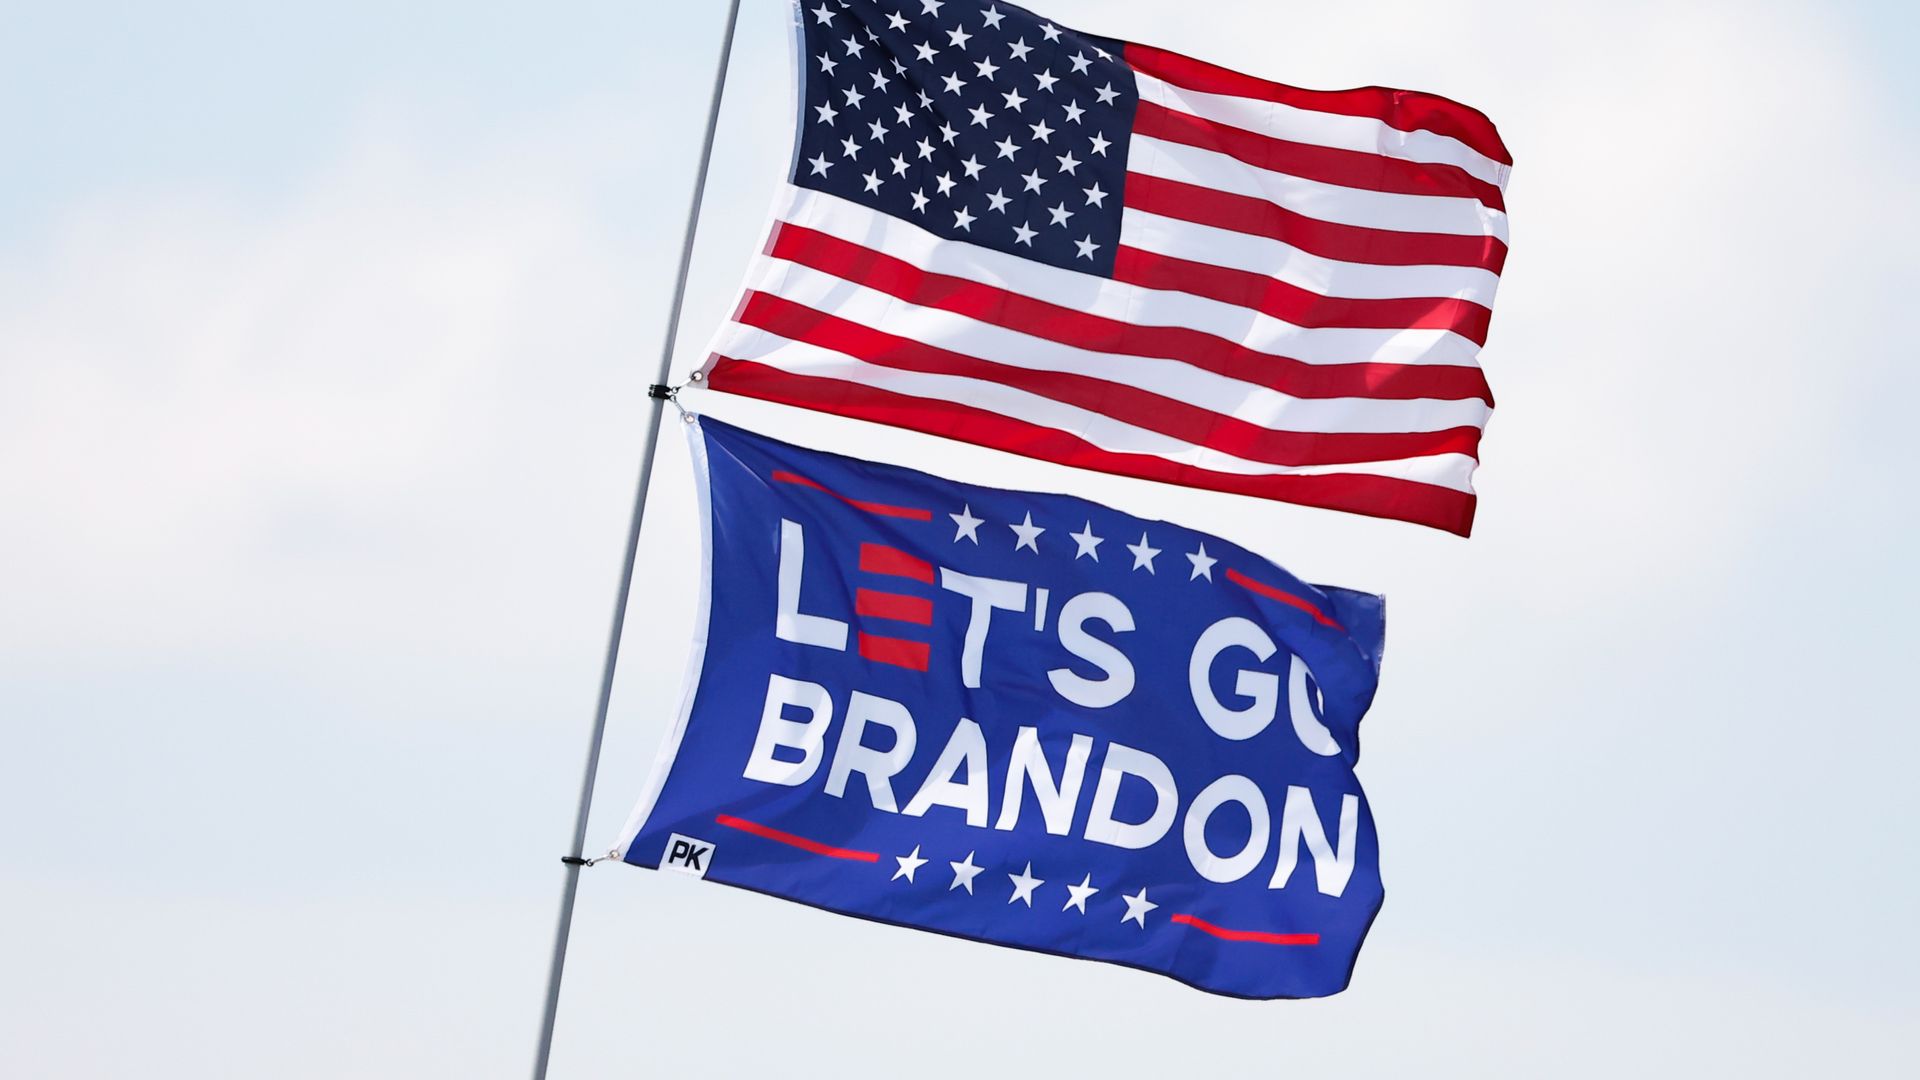 Many conservatives use the phrase "let's go Brandon" as anti-Biden rhetoric. The plaintiffs claim the school censored political expression.